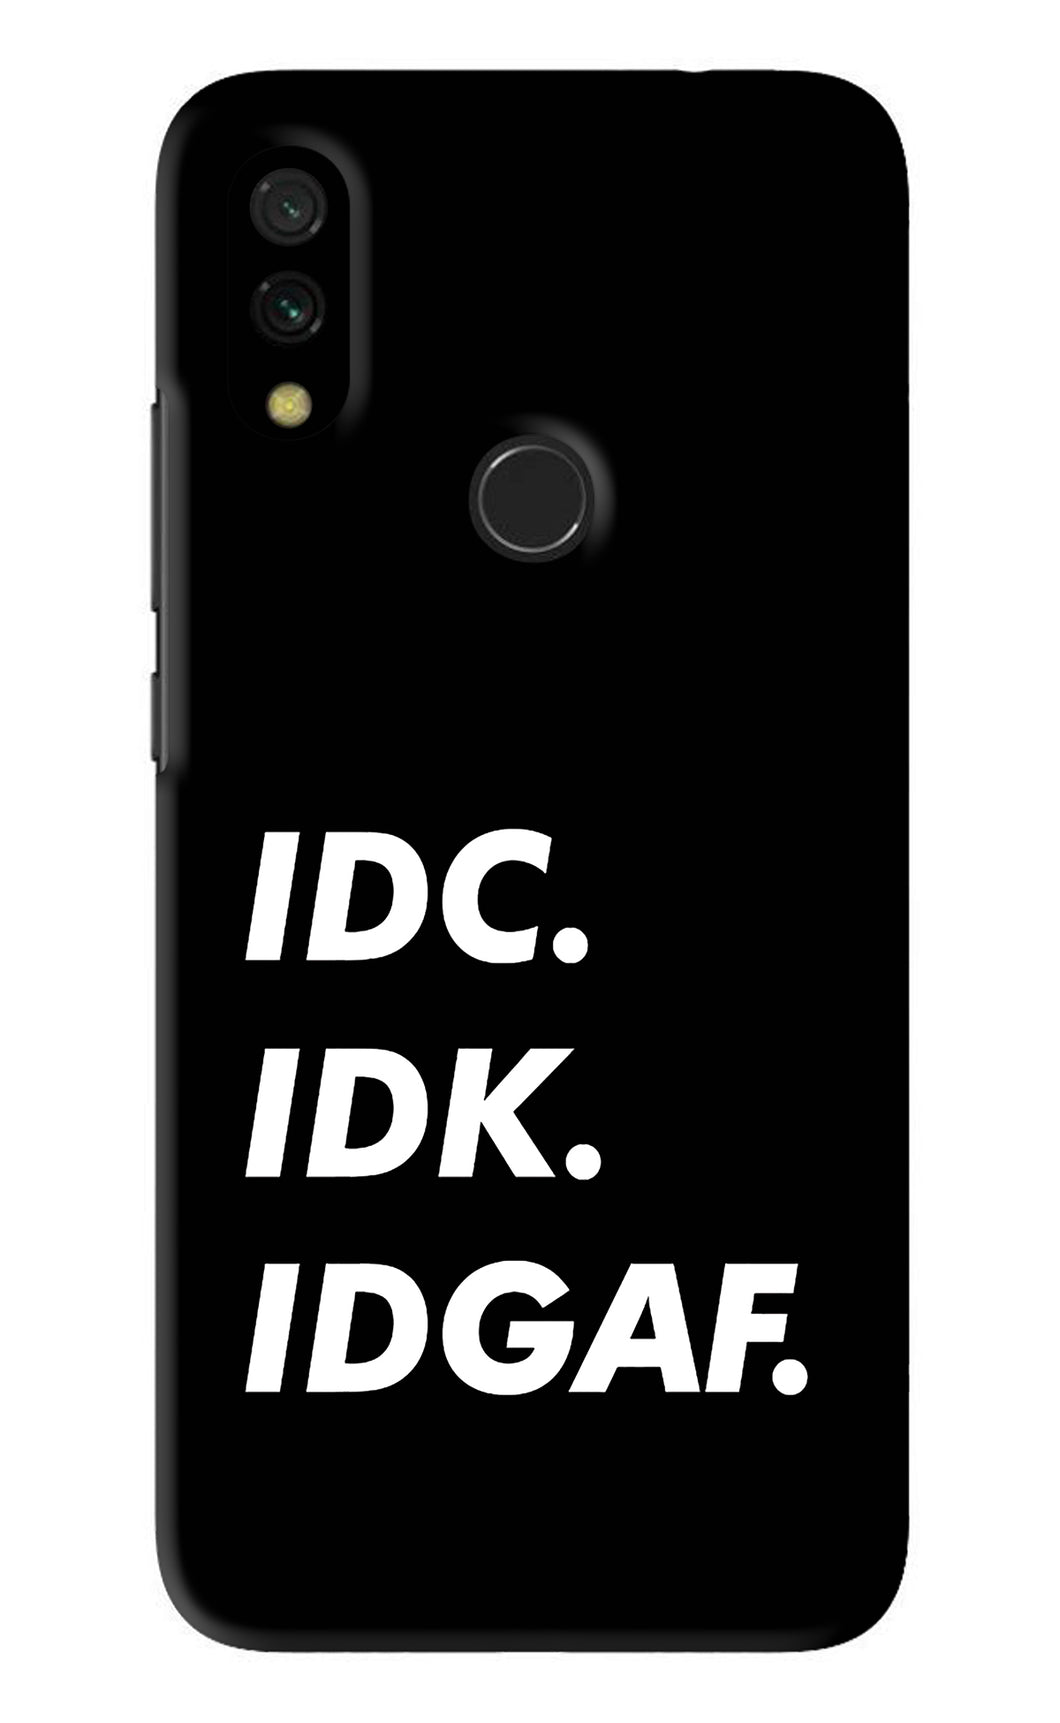 Idc Idk Idgaf Xiaomi Redmi 7 Back Skin Wrap